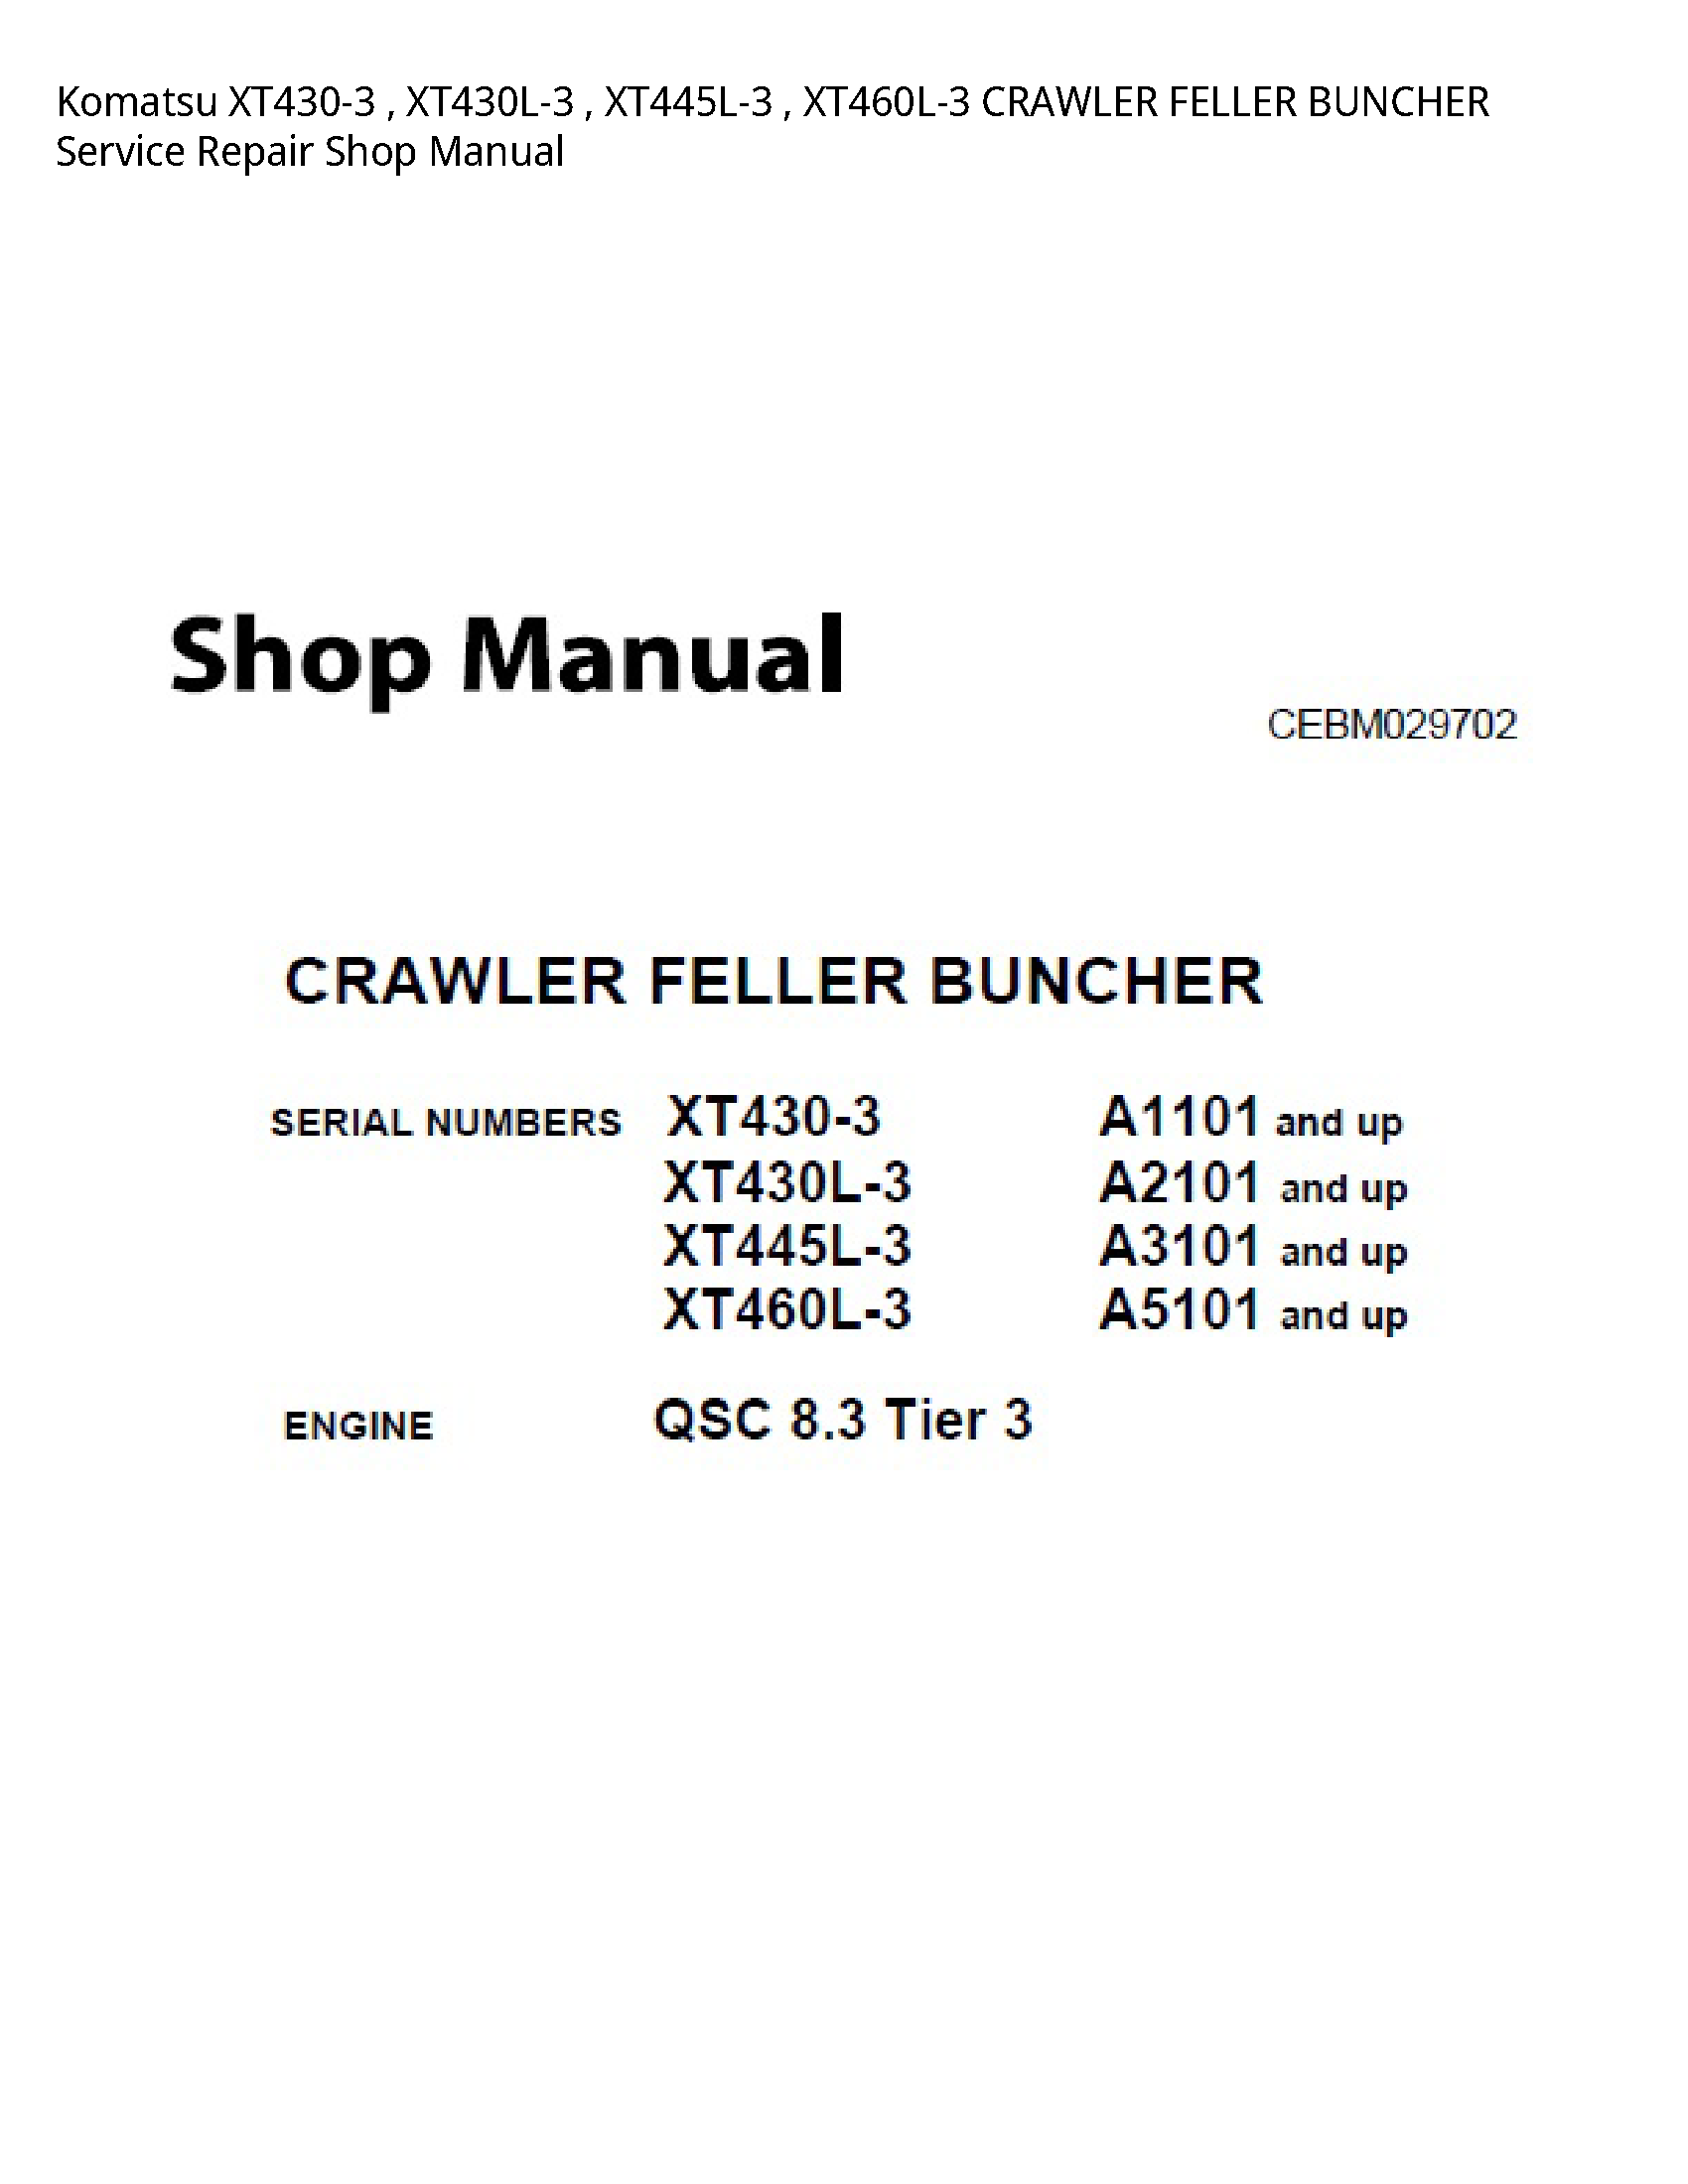 KOMATSU XT430-3 CRAWLER FELLER BUNCHER manual